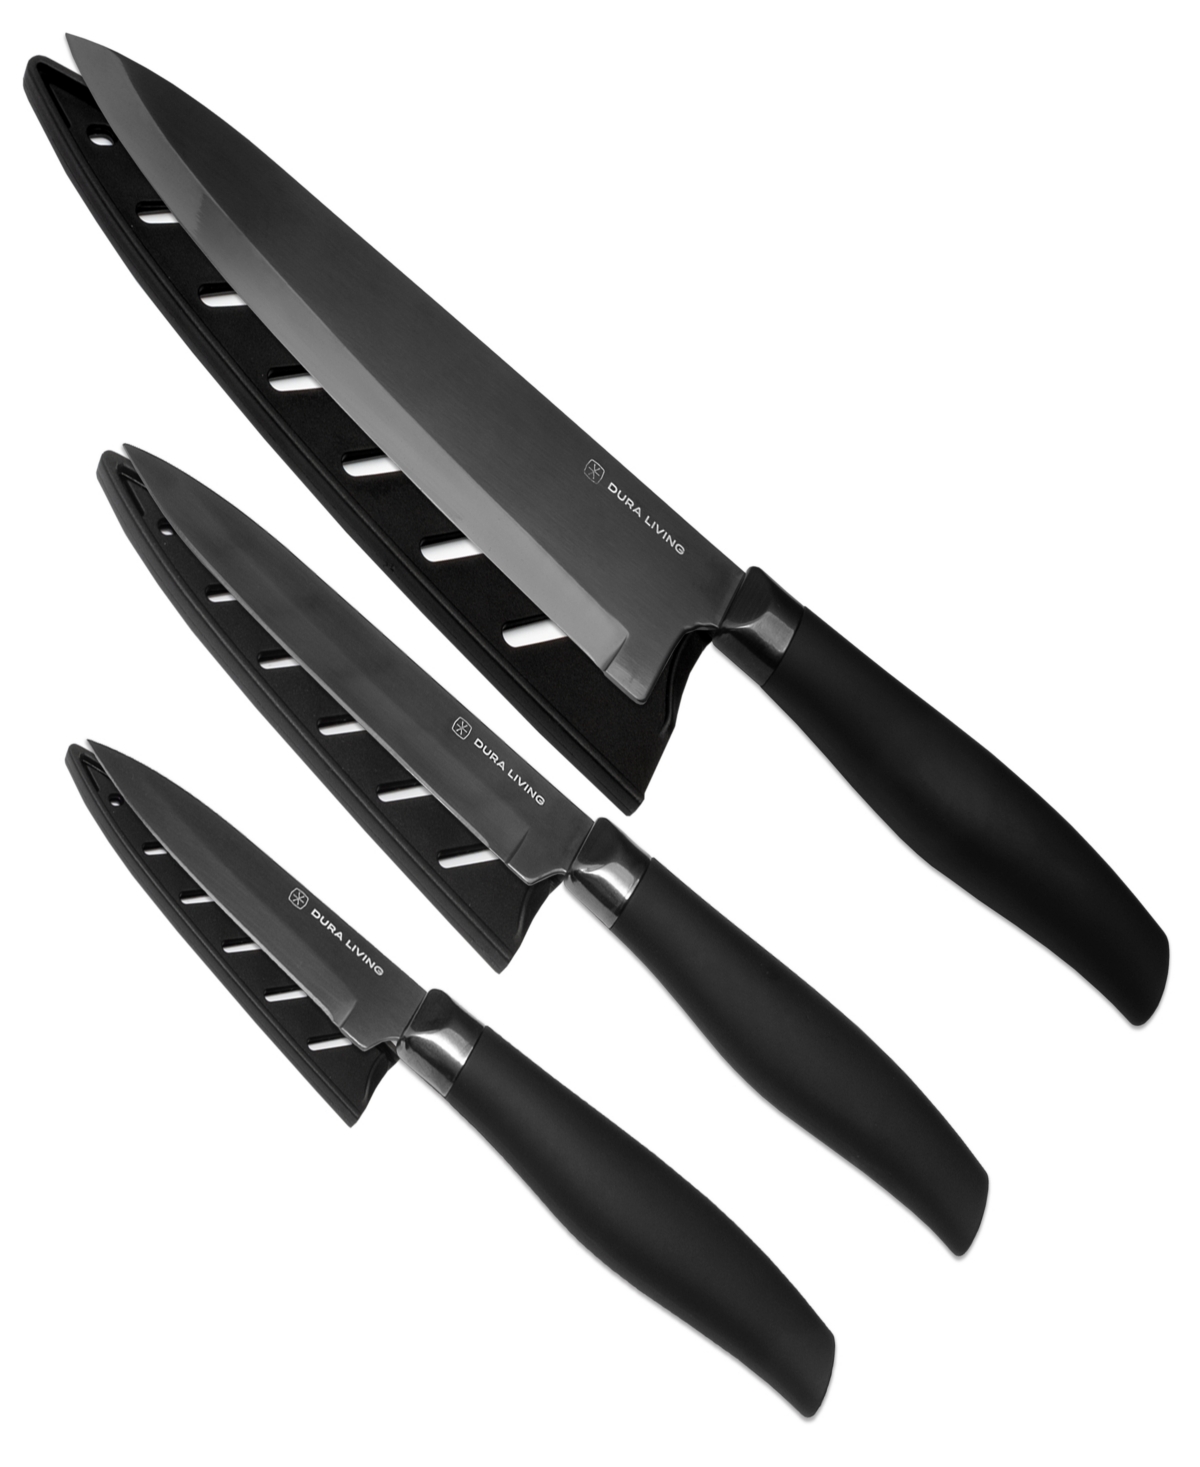 Duraliving 3-piece Cutlery Set In Gunmetal